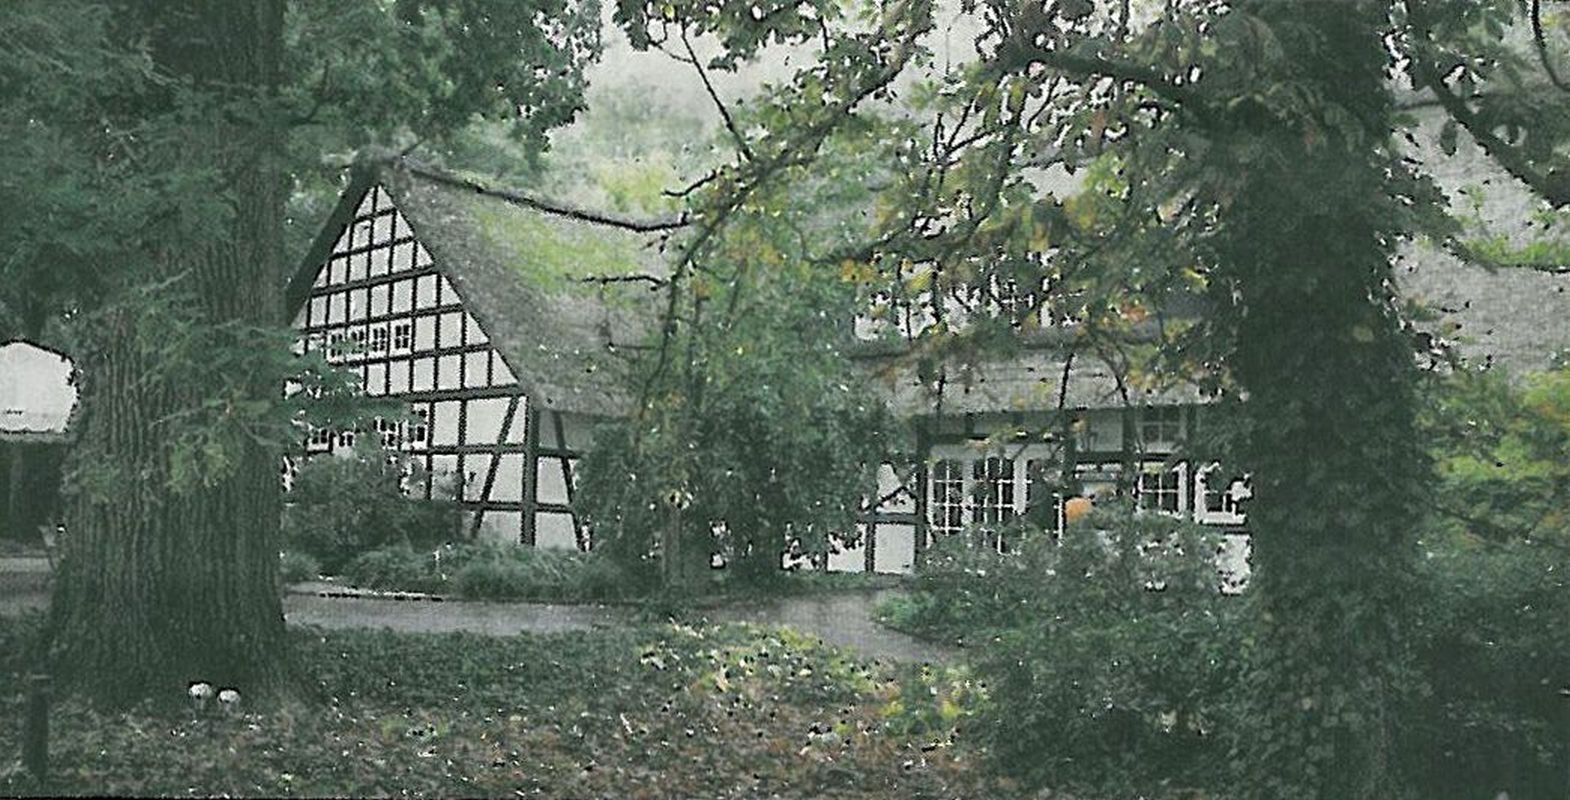 Landhaus Götker in der Samtgemeinde Lemförde - Gem. Lembruch (Kreismuseum Syke CC BY-NC-SA)